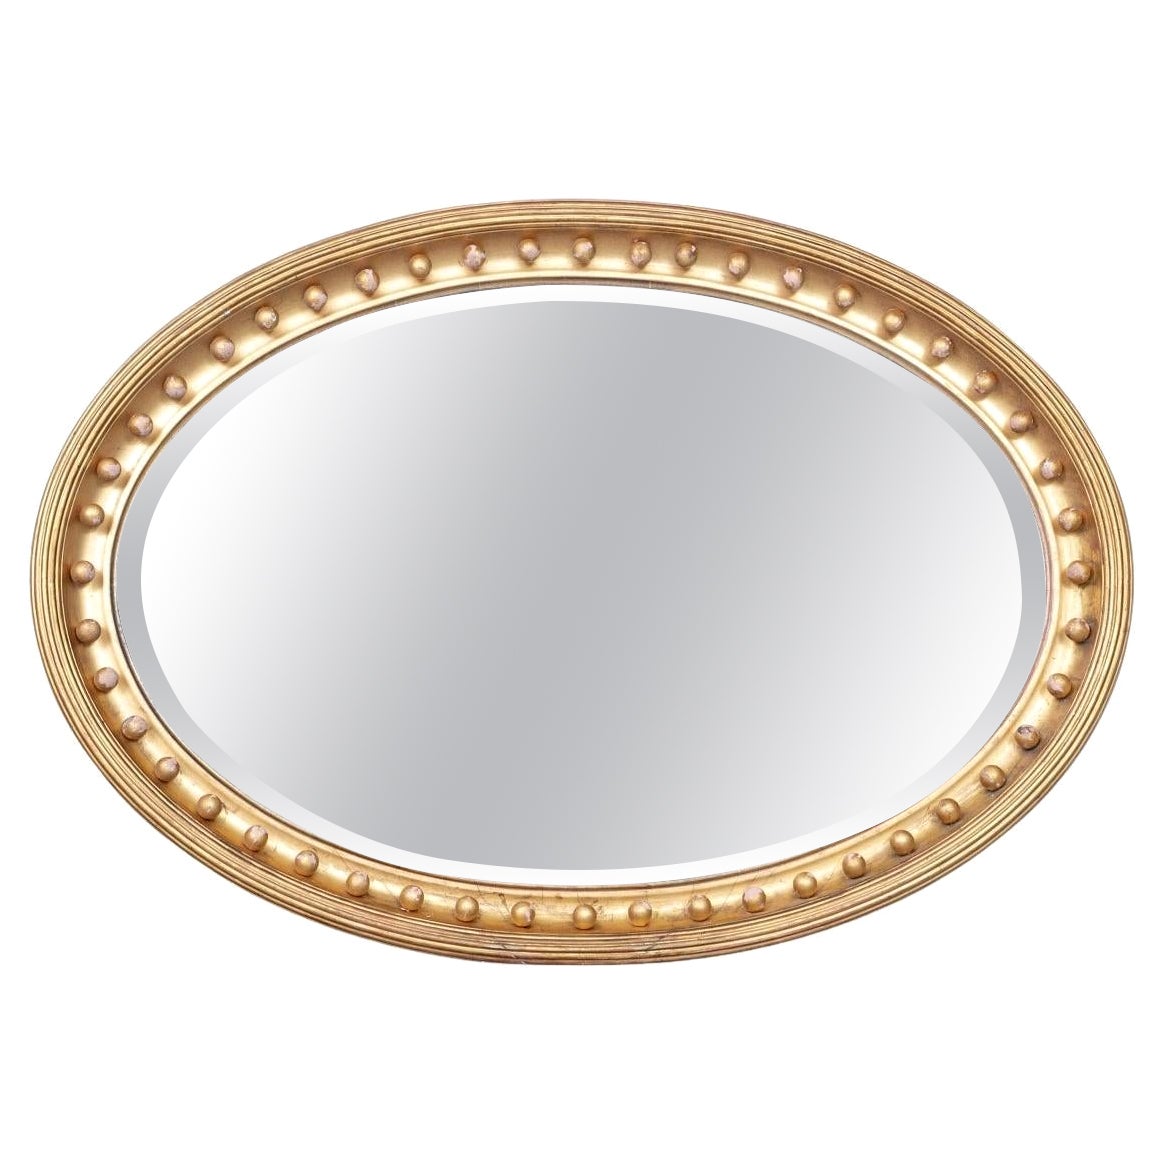 Feiner ovaler vergoldeter abgeschrägter Spiegel aus dem 19.